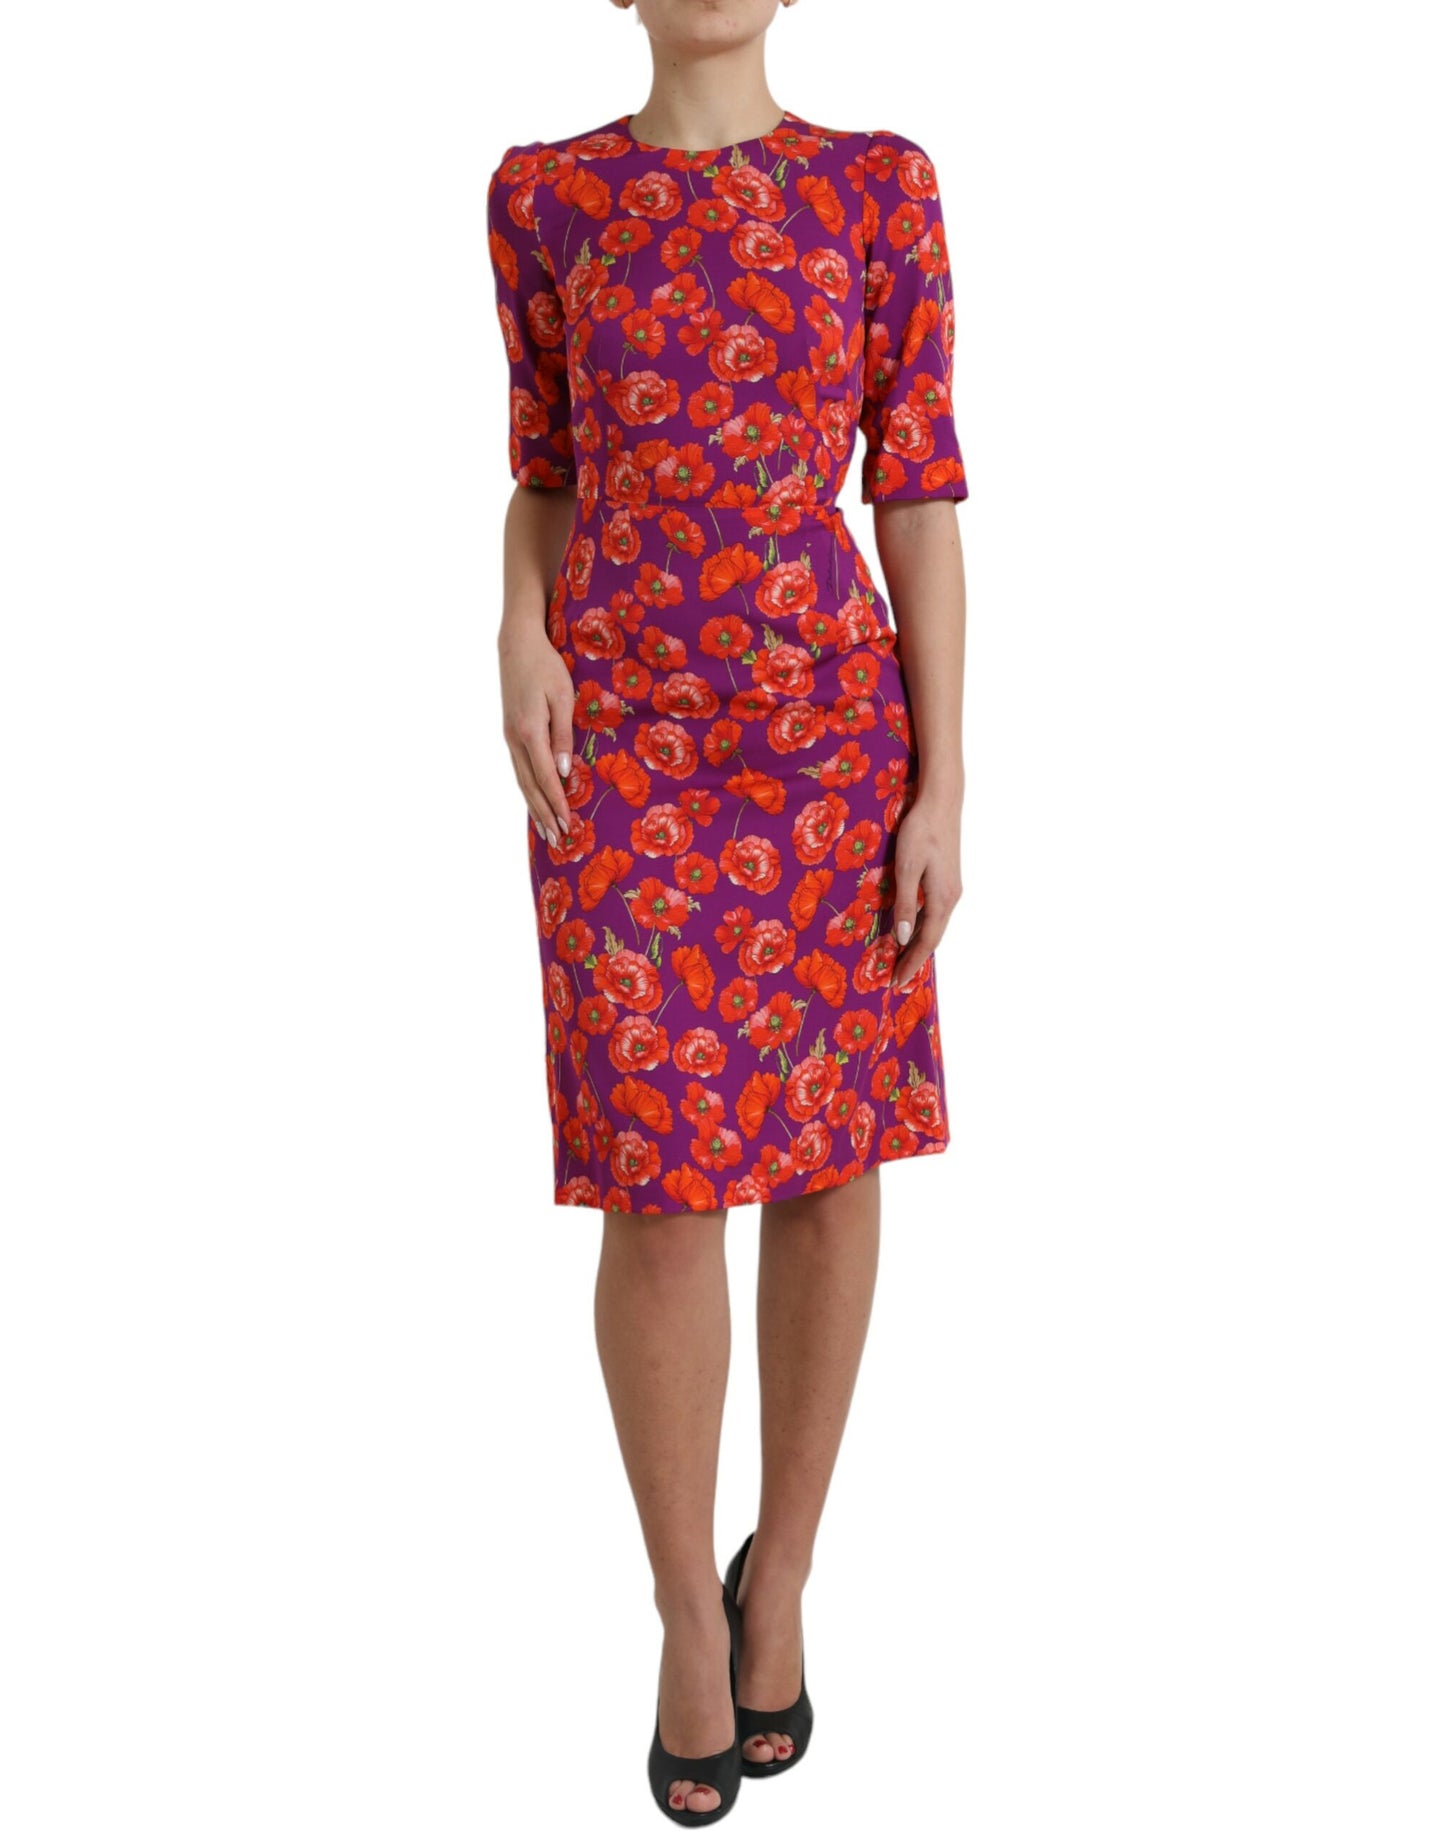 Dolce & Gabbana Multicolor Floral Poppy Print Sheath Dress